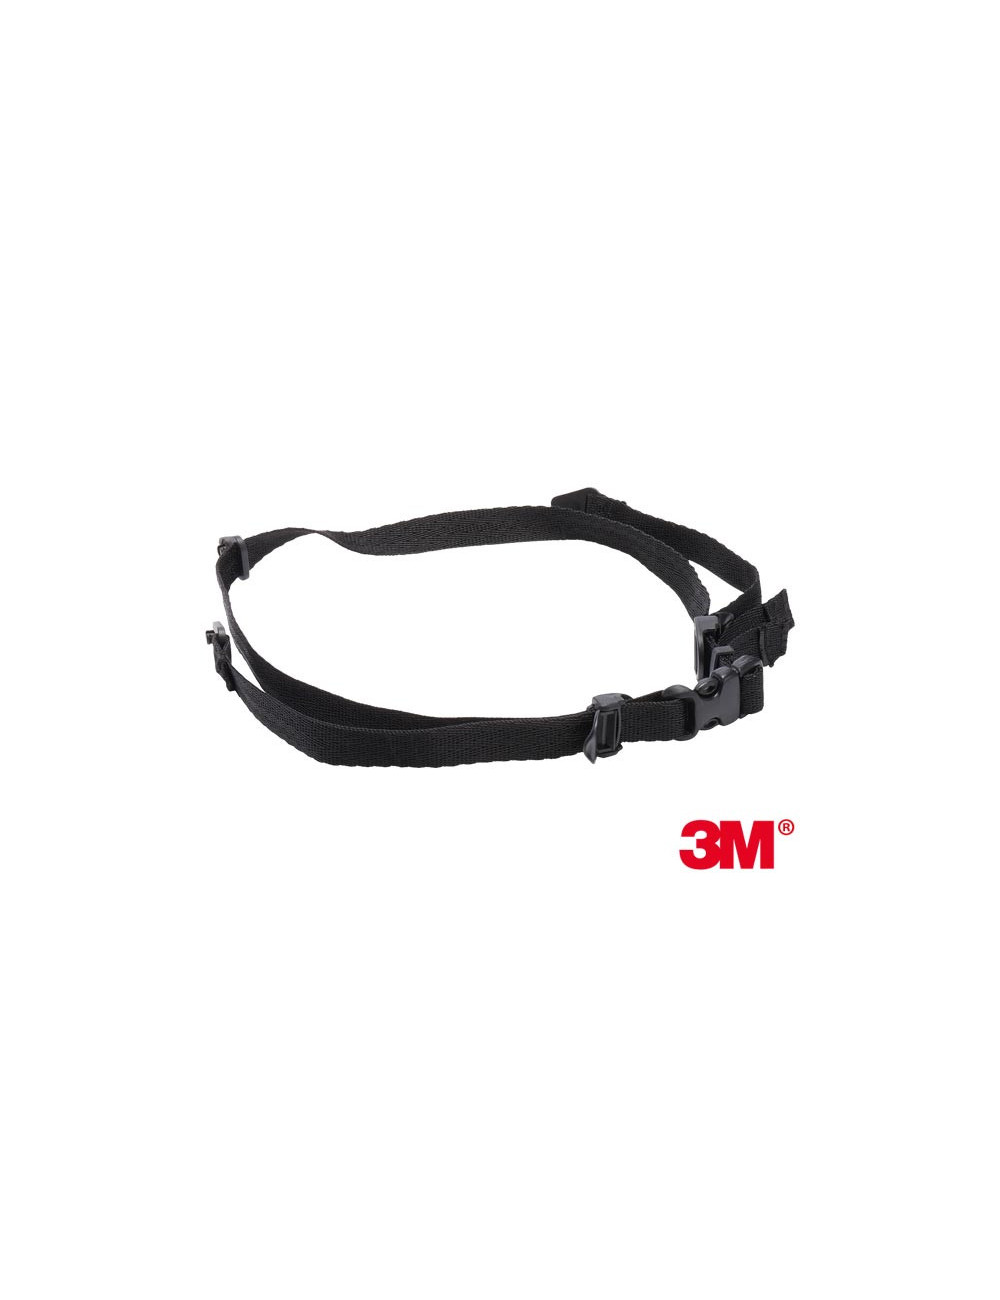 Chin strap for helmet b black 3M 3m-strap-gh4